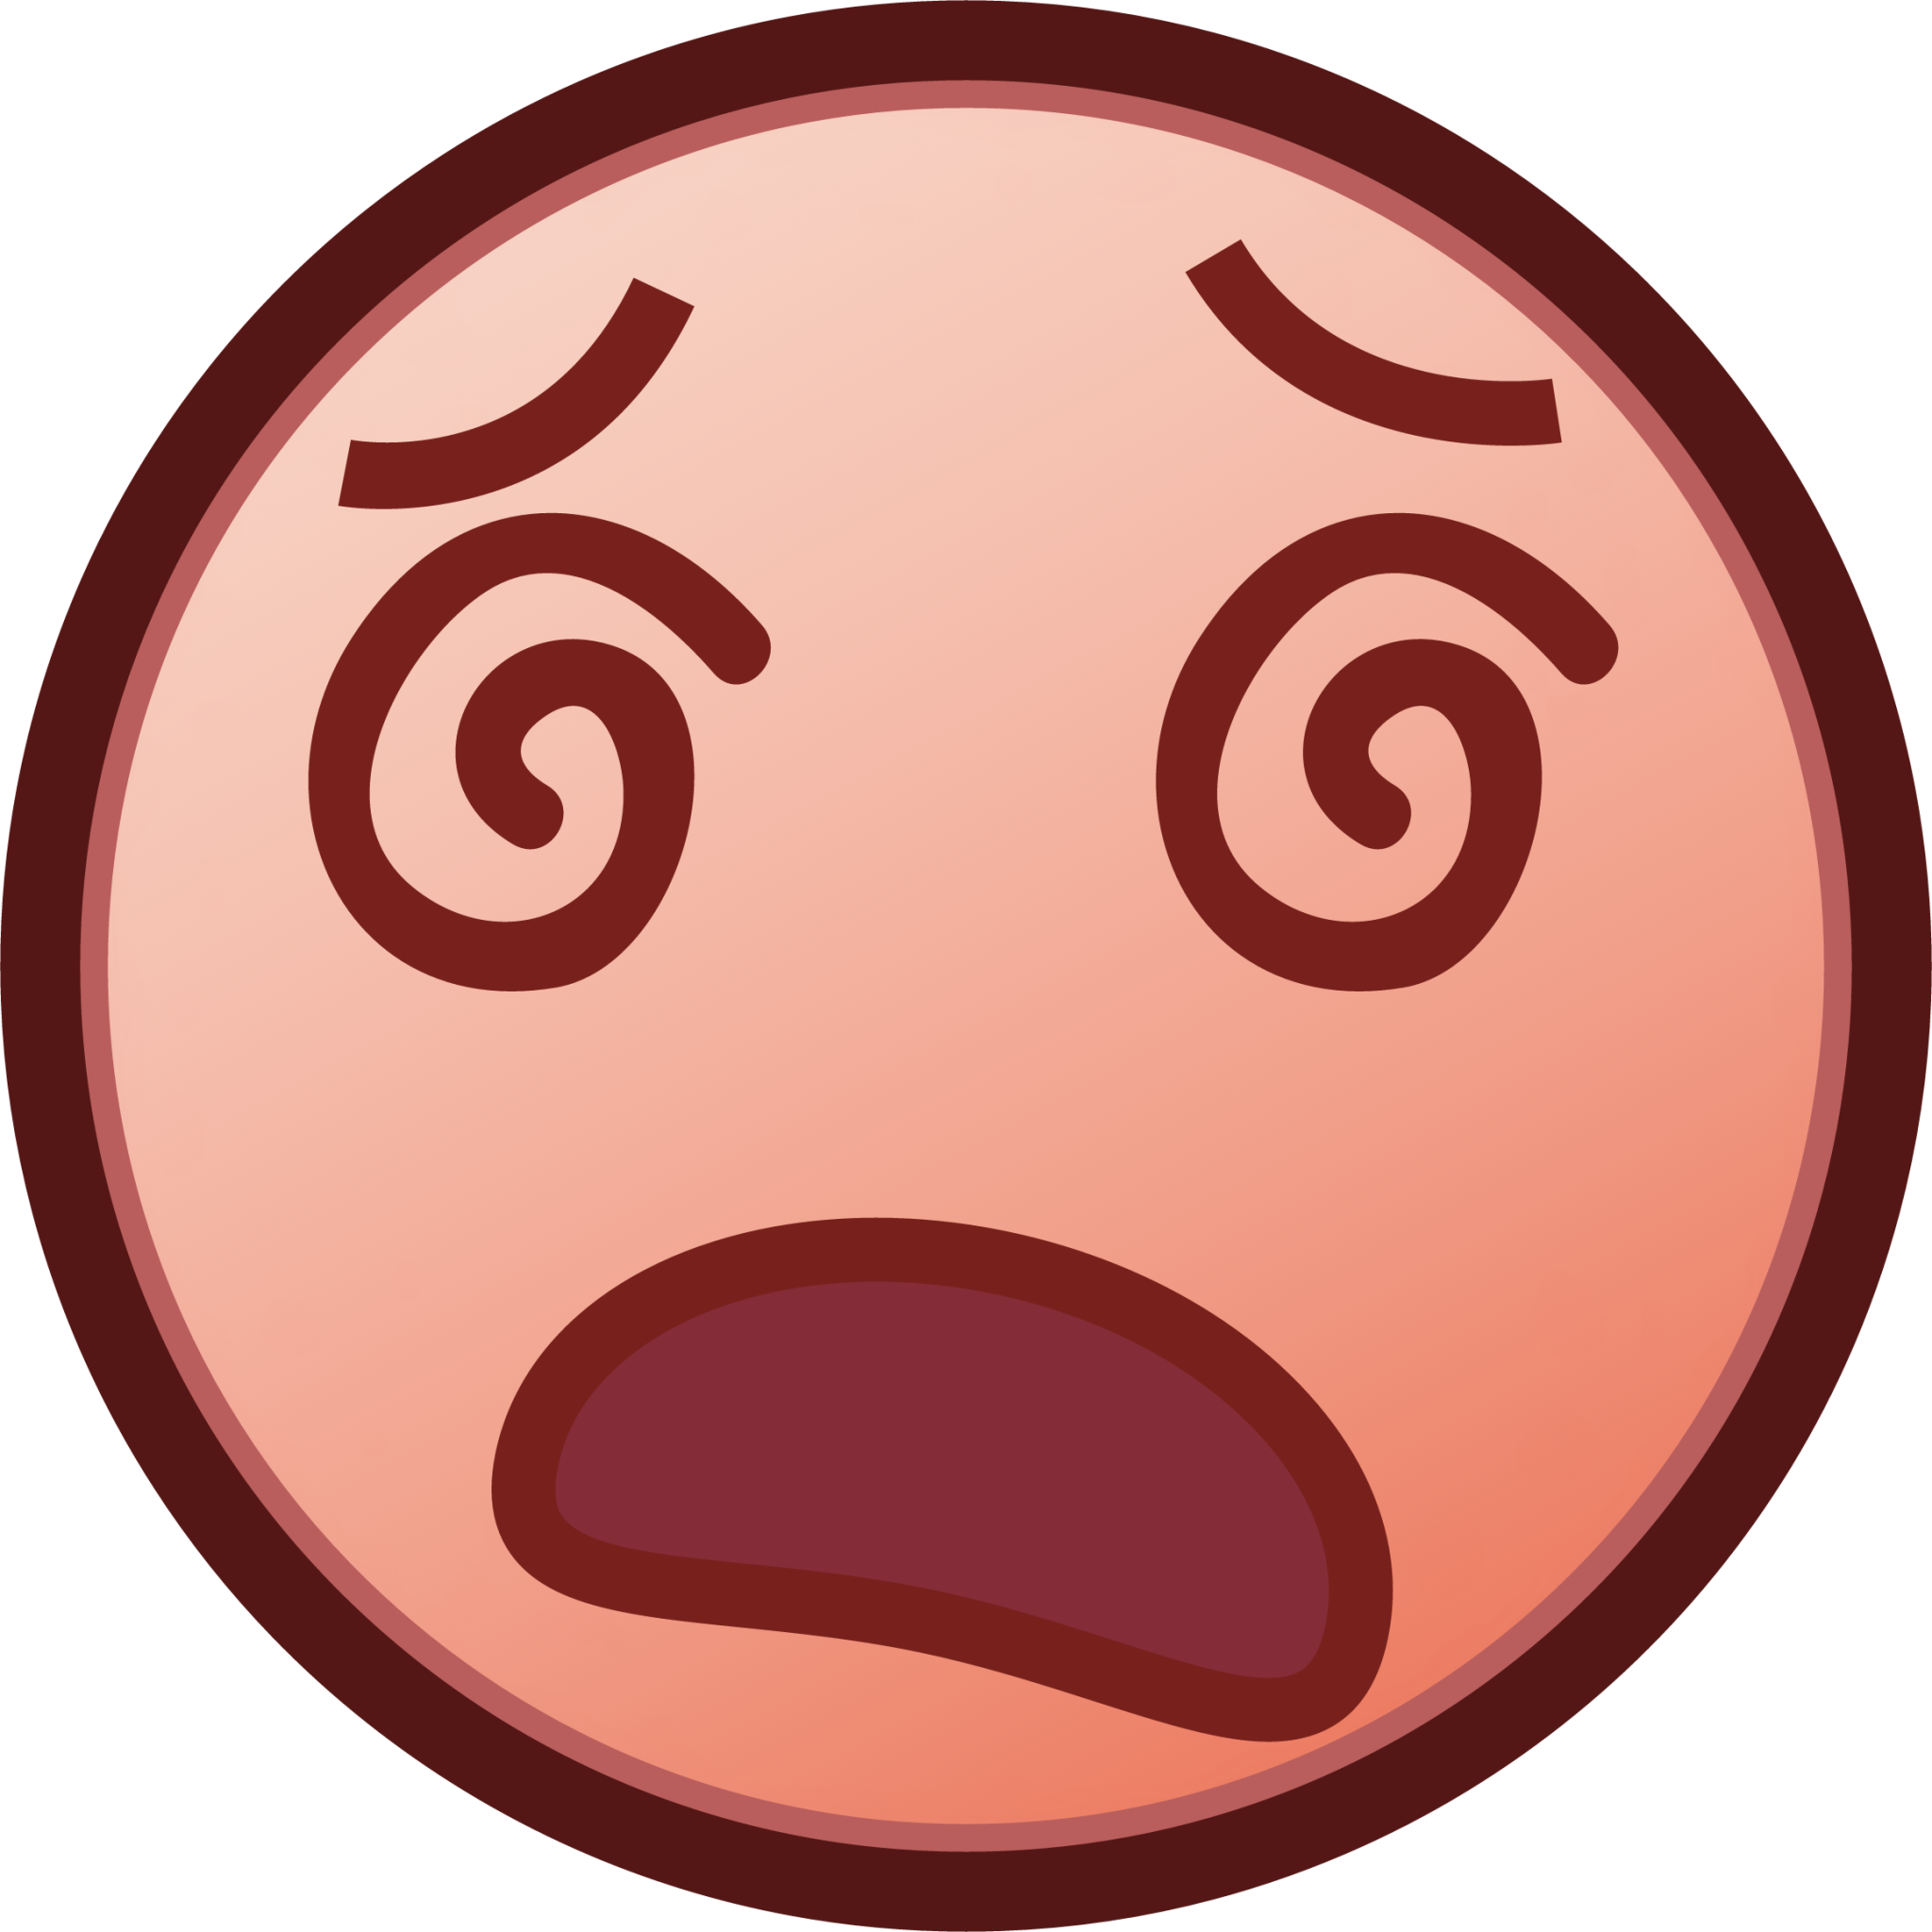 dizzy face (plain) emoji